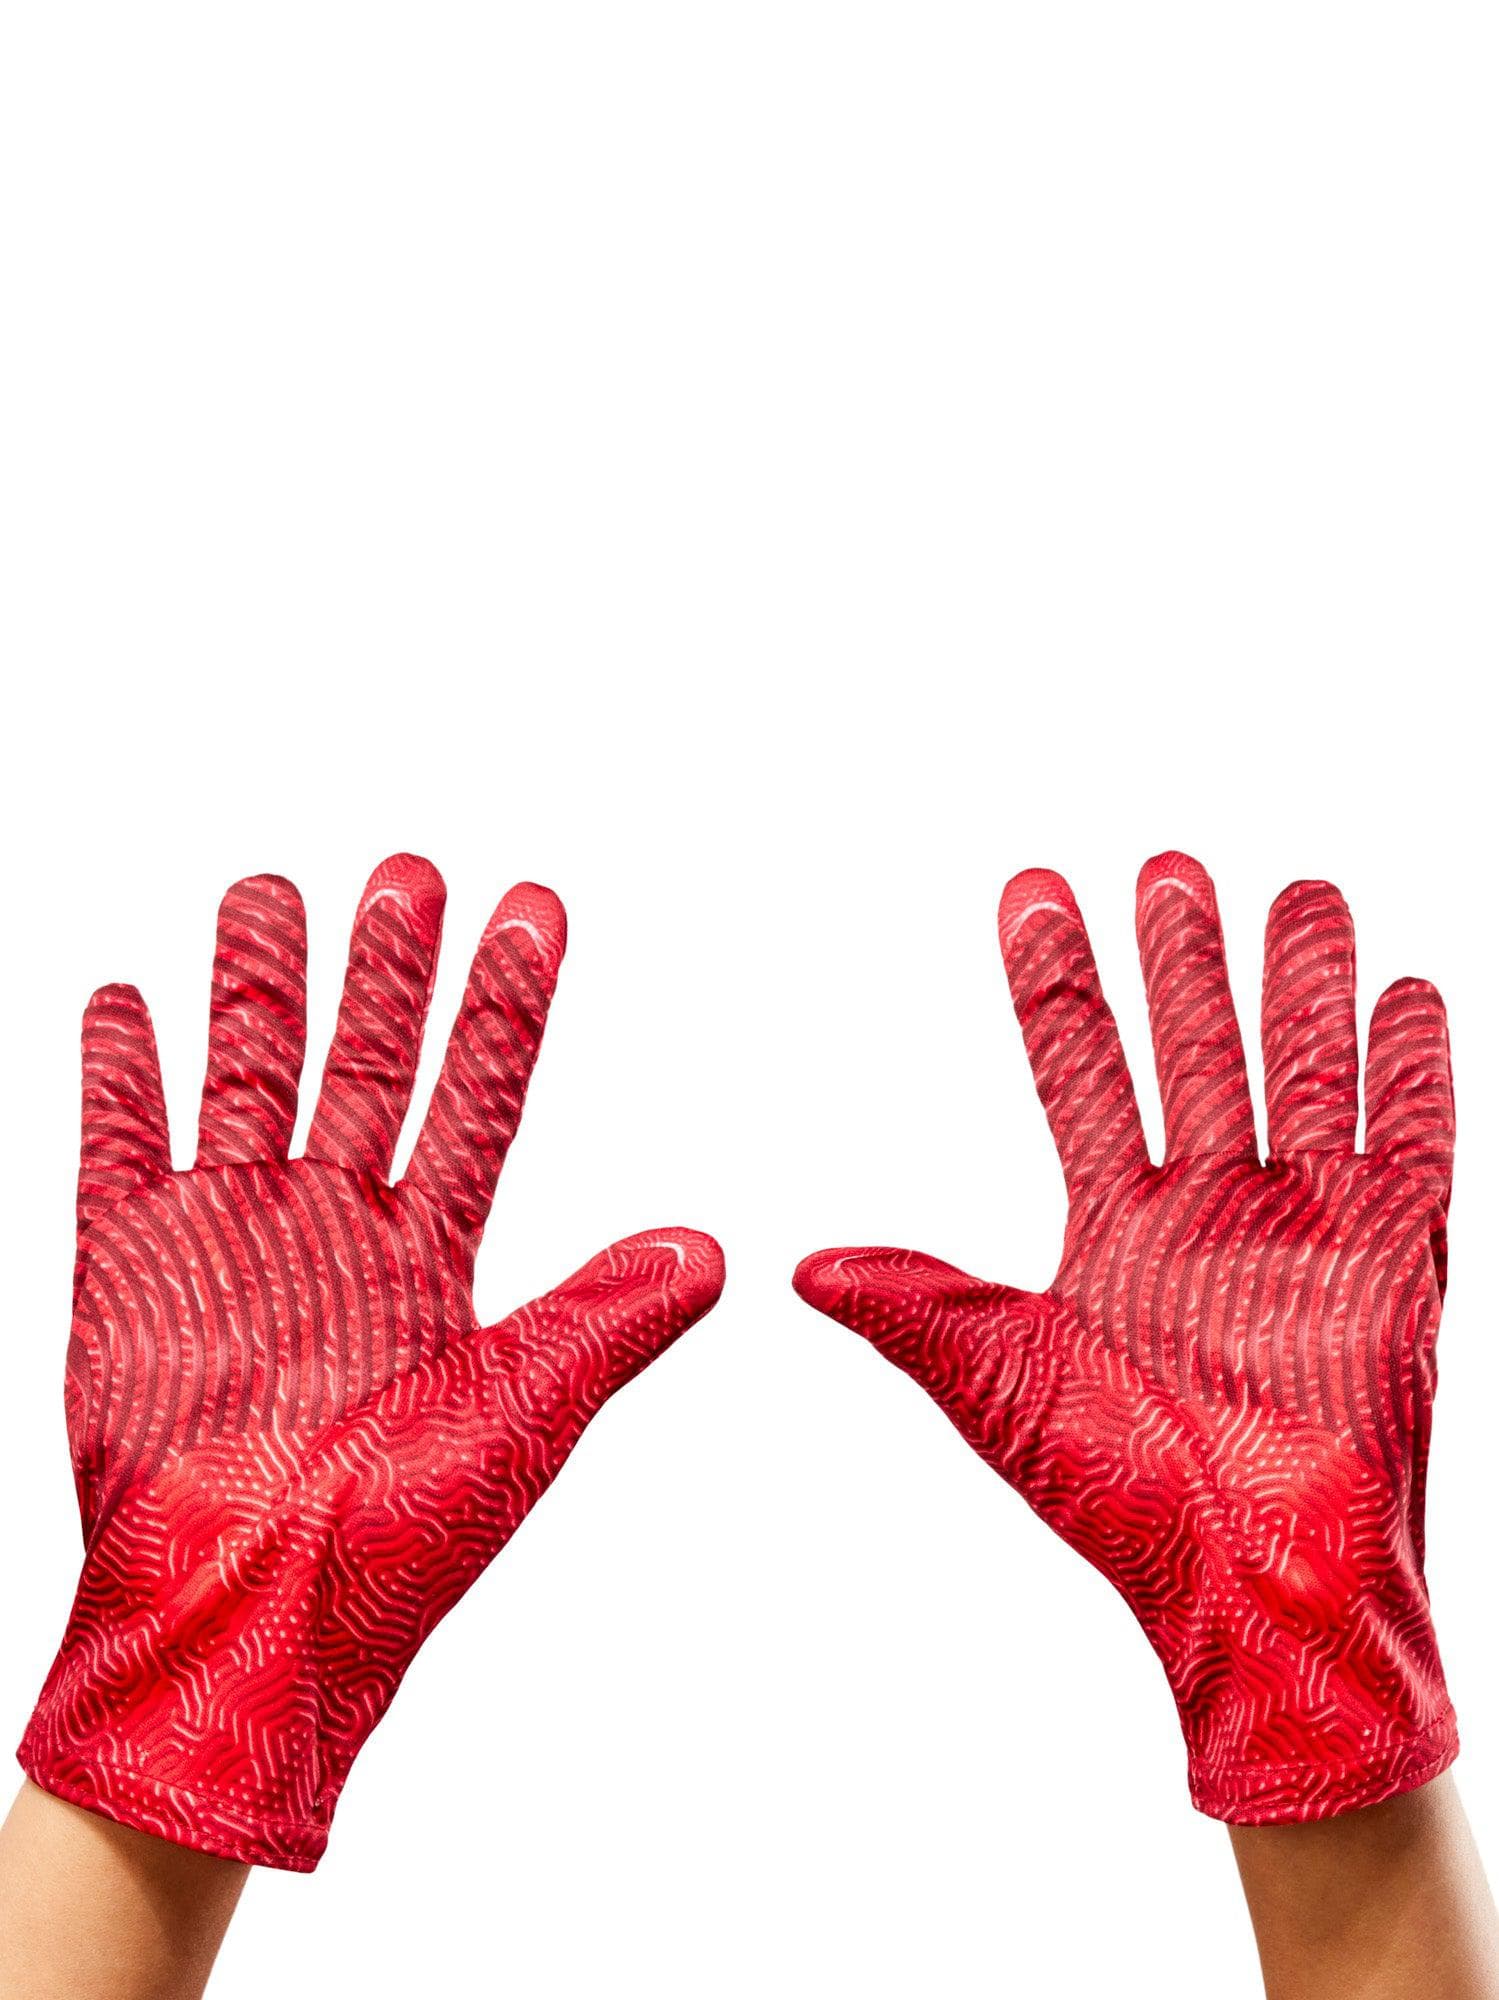 Kids' DC Comics The Flash Gloves - costumes.com